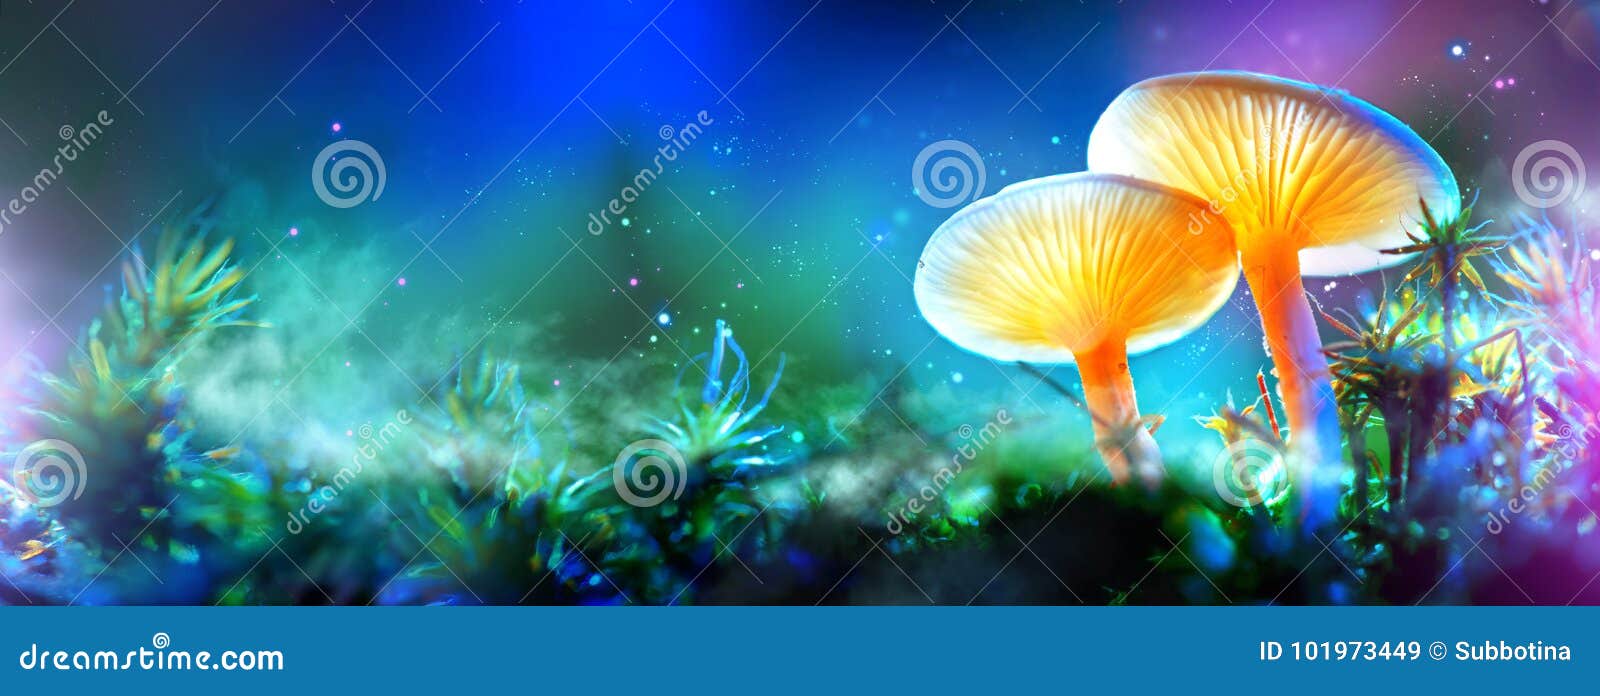 mushroom. fantasy glowing mushrooms in mystery dark forest